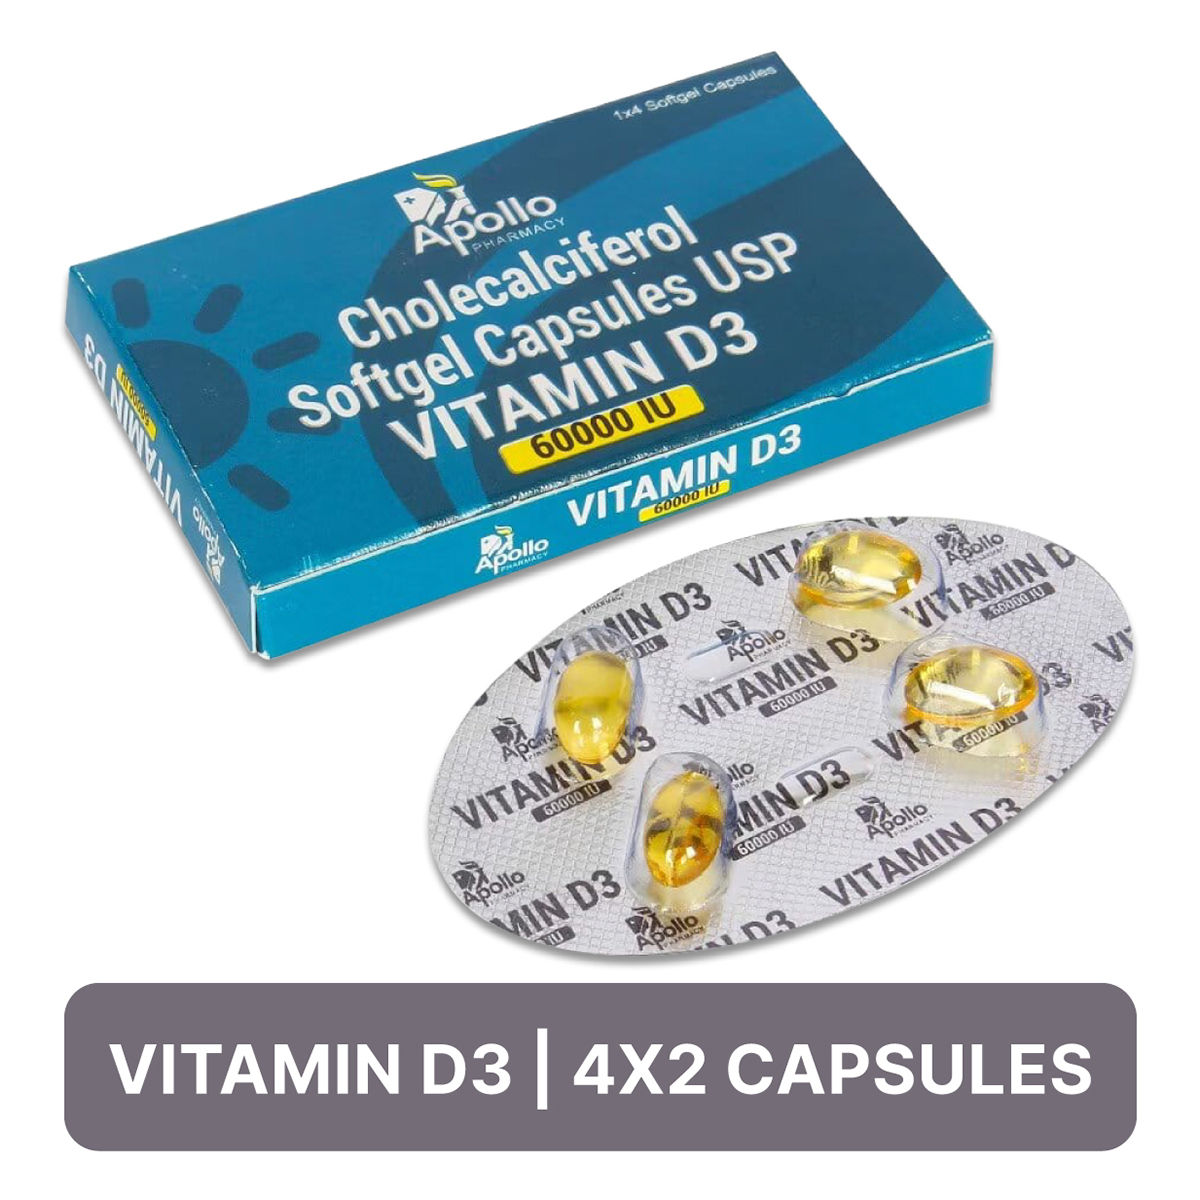 Buy Apollo Pharmacy Vitamin D3 60000 IU, 4 Capsules Online